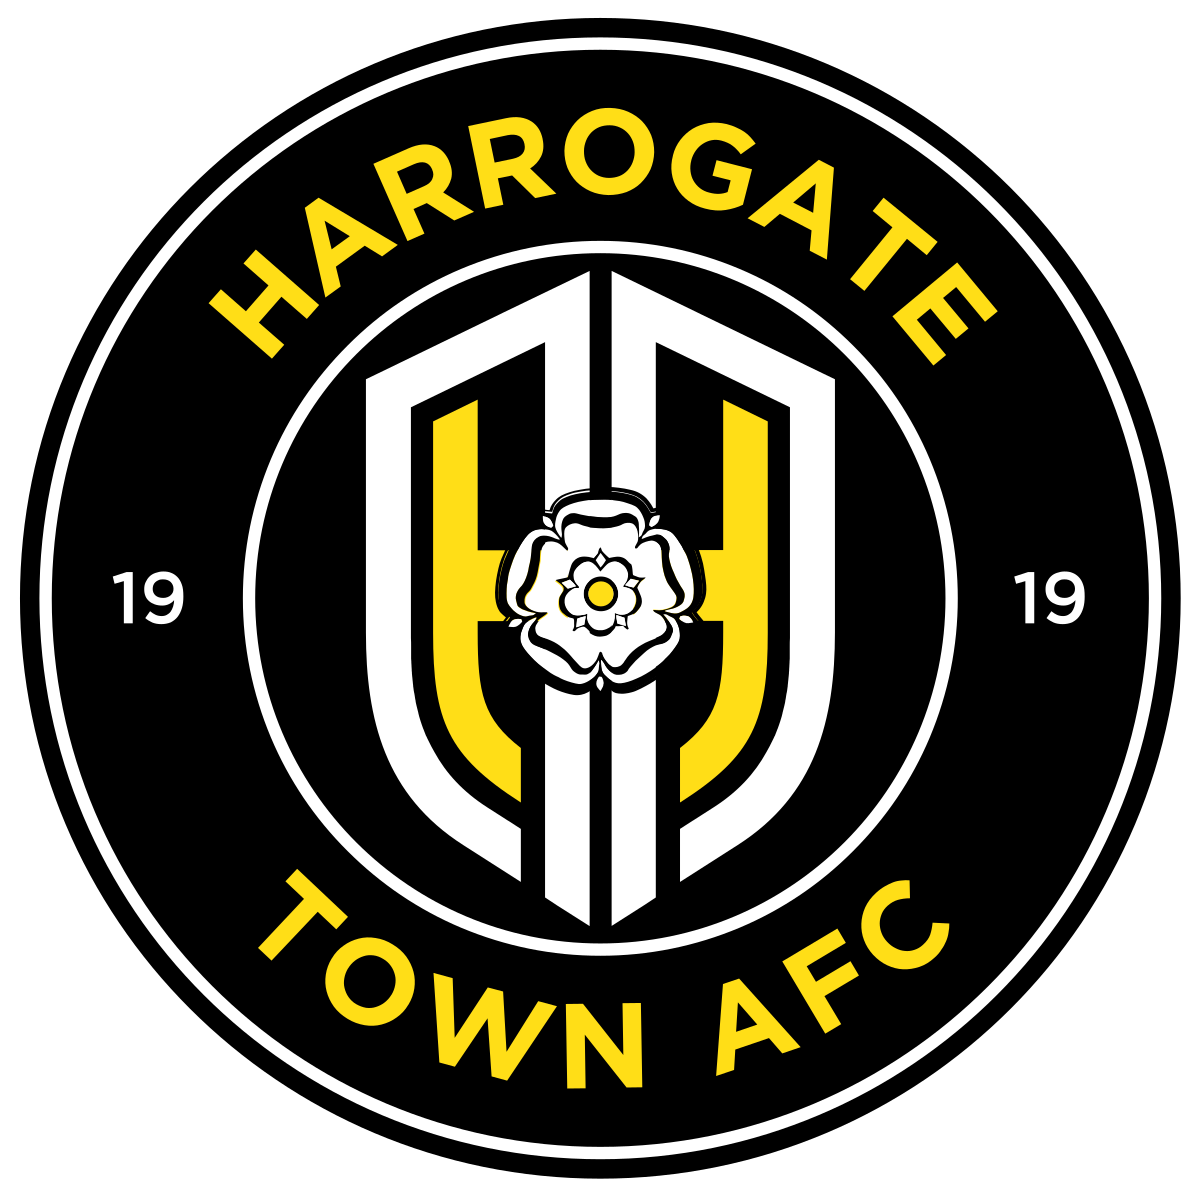 Harrogate_Town_AFC.svg